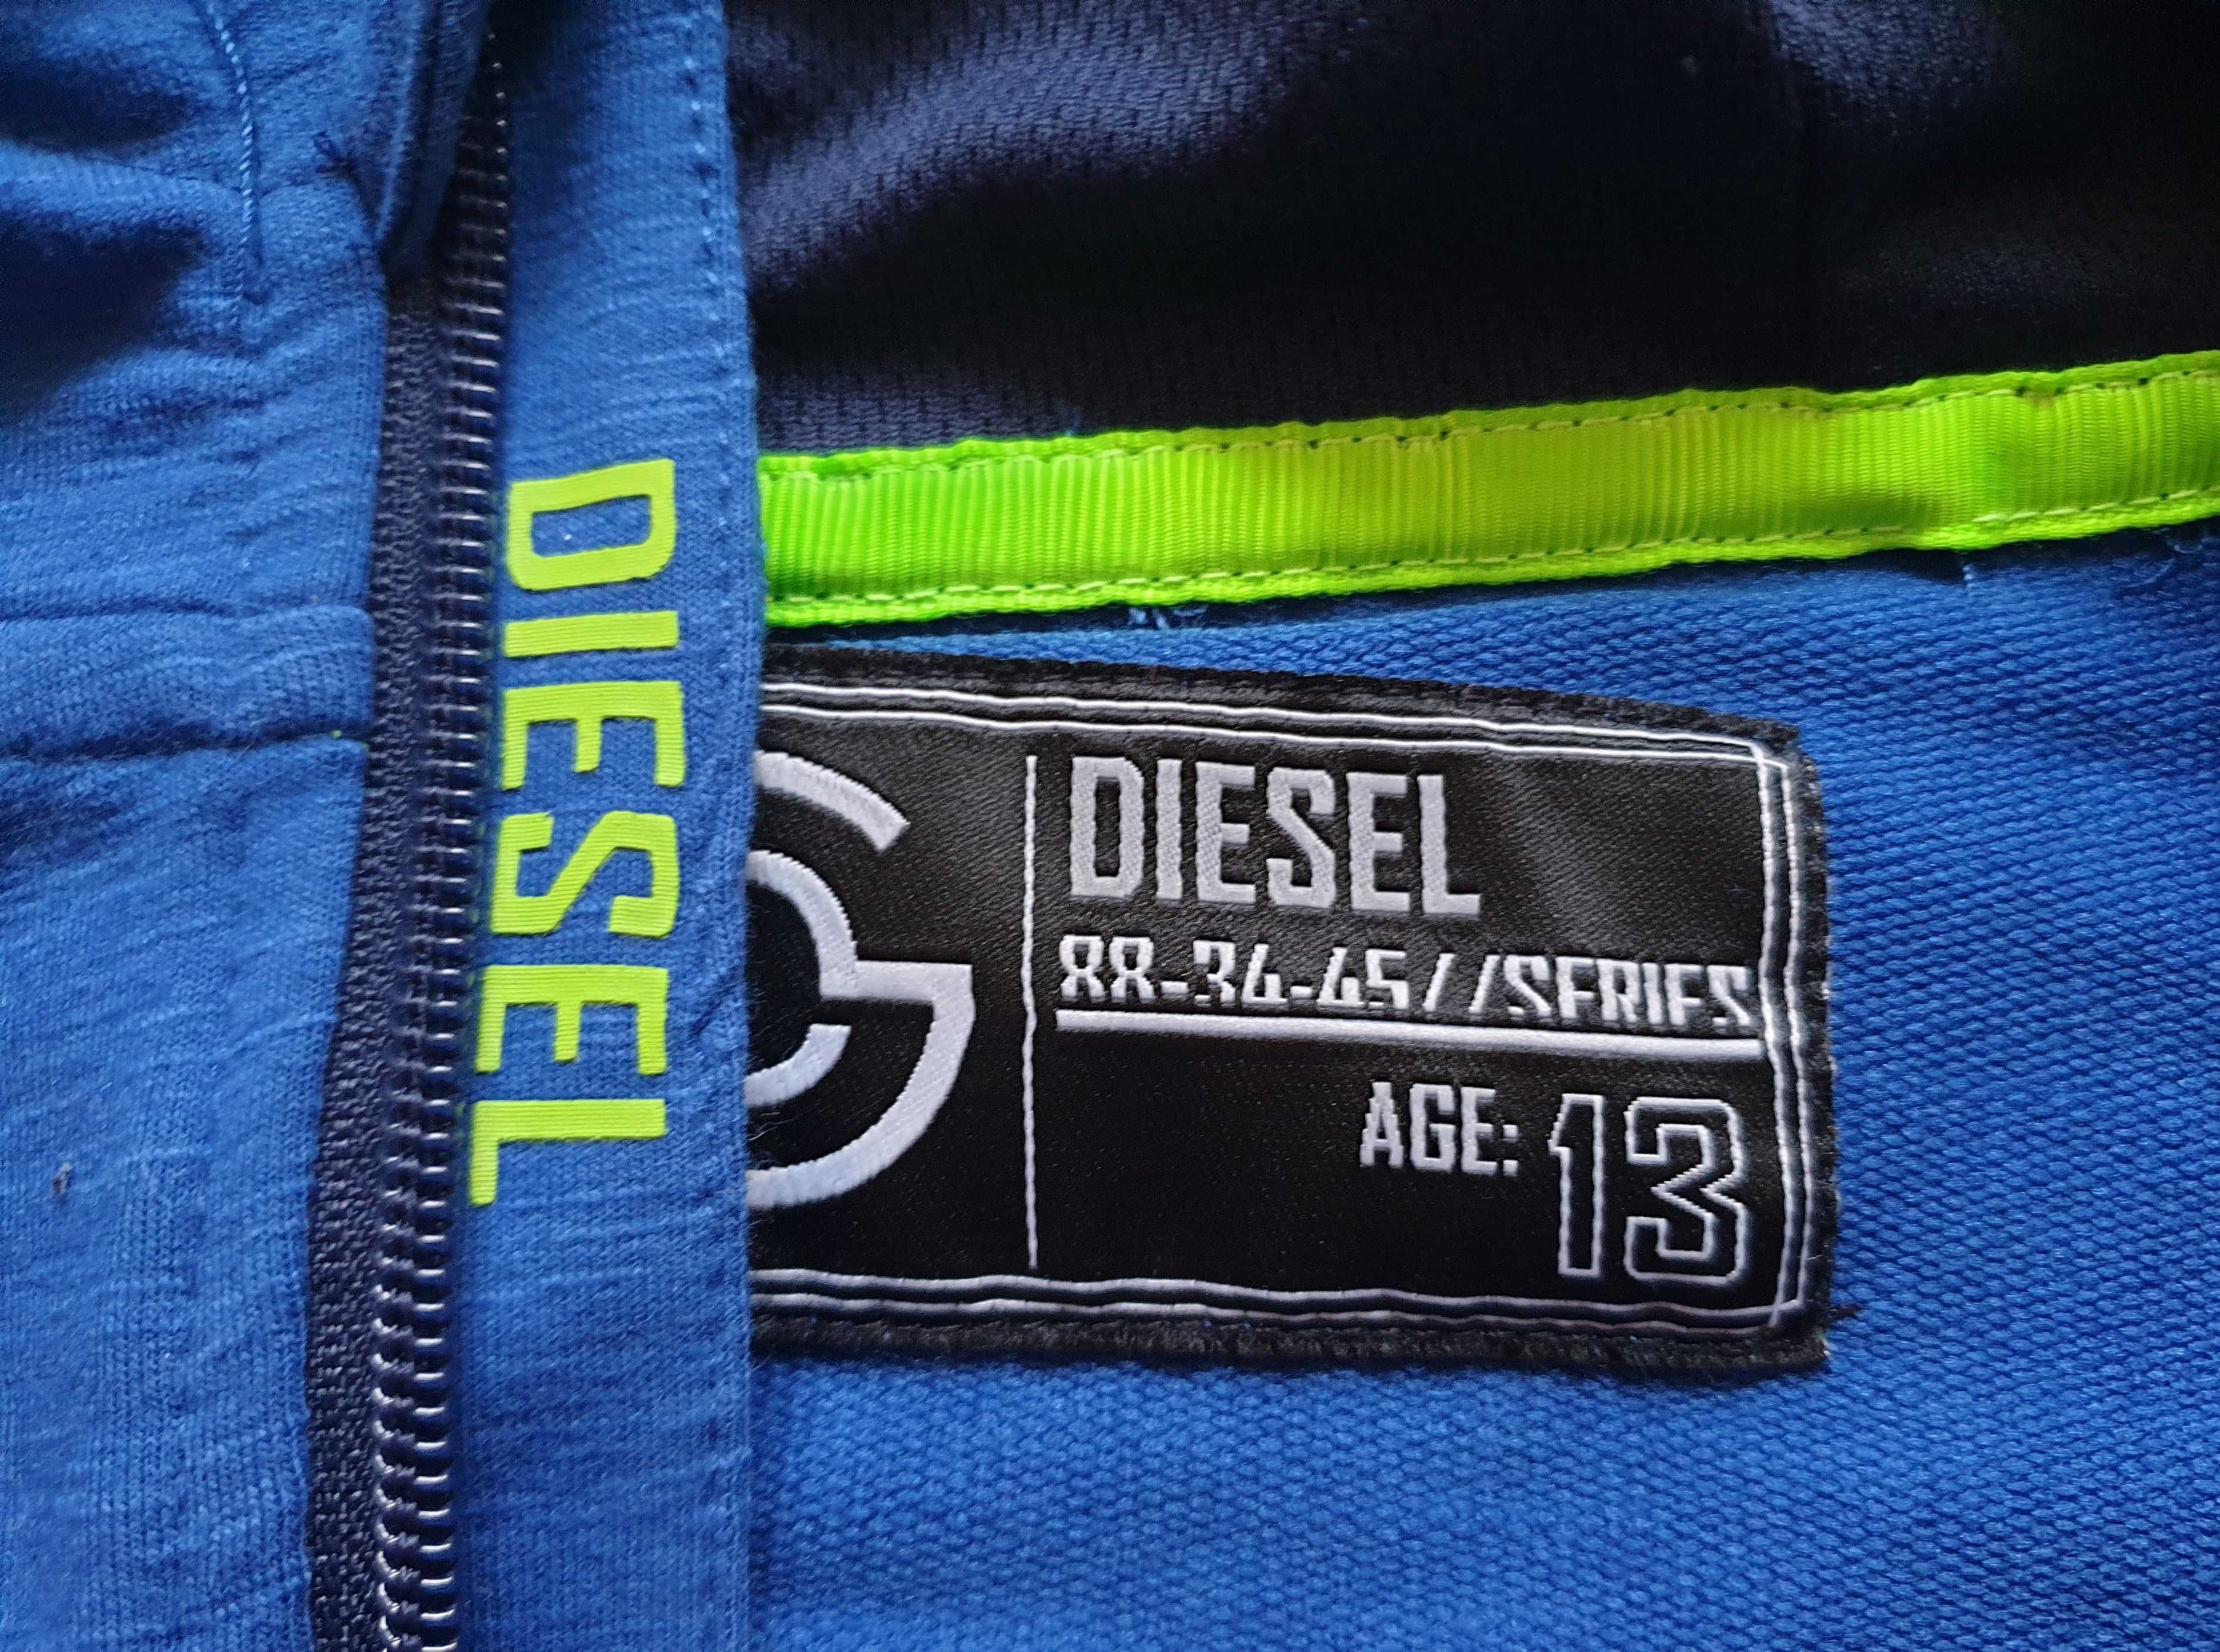 Bluzy dresowe Diesel, H&M r. 158 cm - 2 sztuki